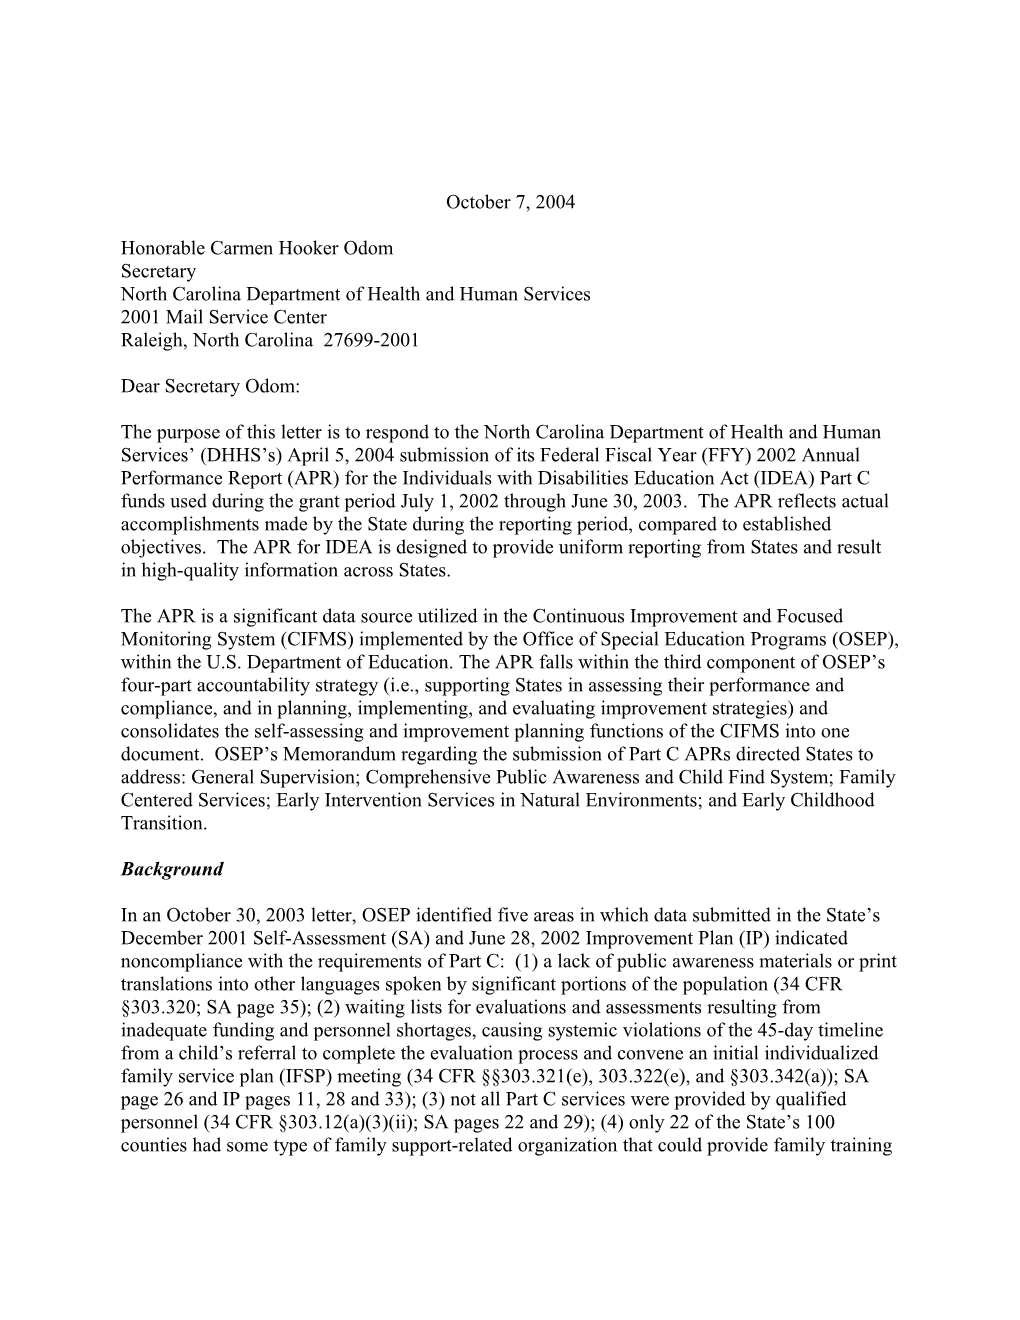 North Carolina Part C APR Letter, 2002-2003 (MS Word)